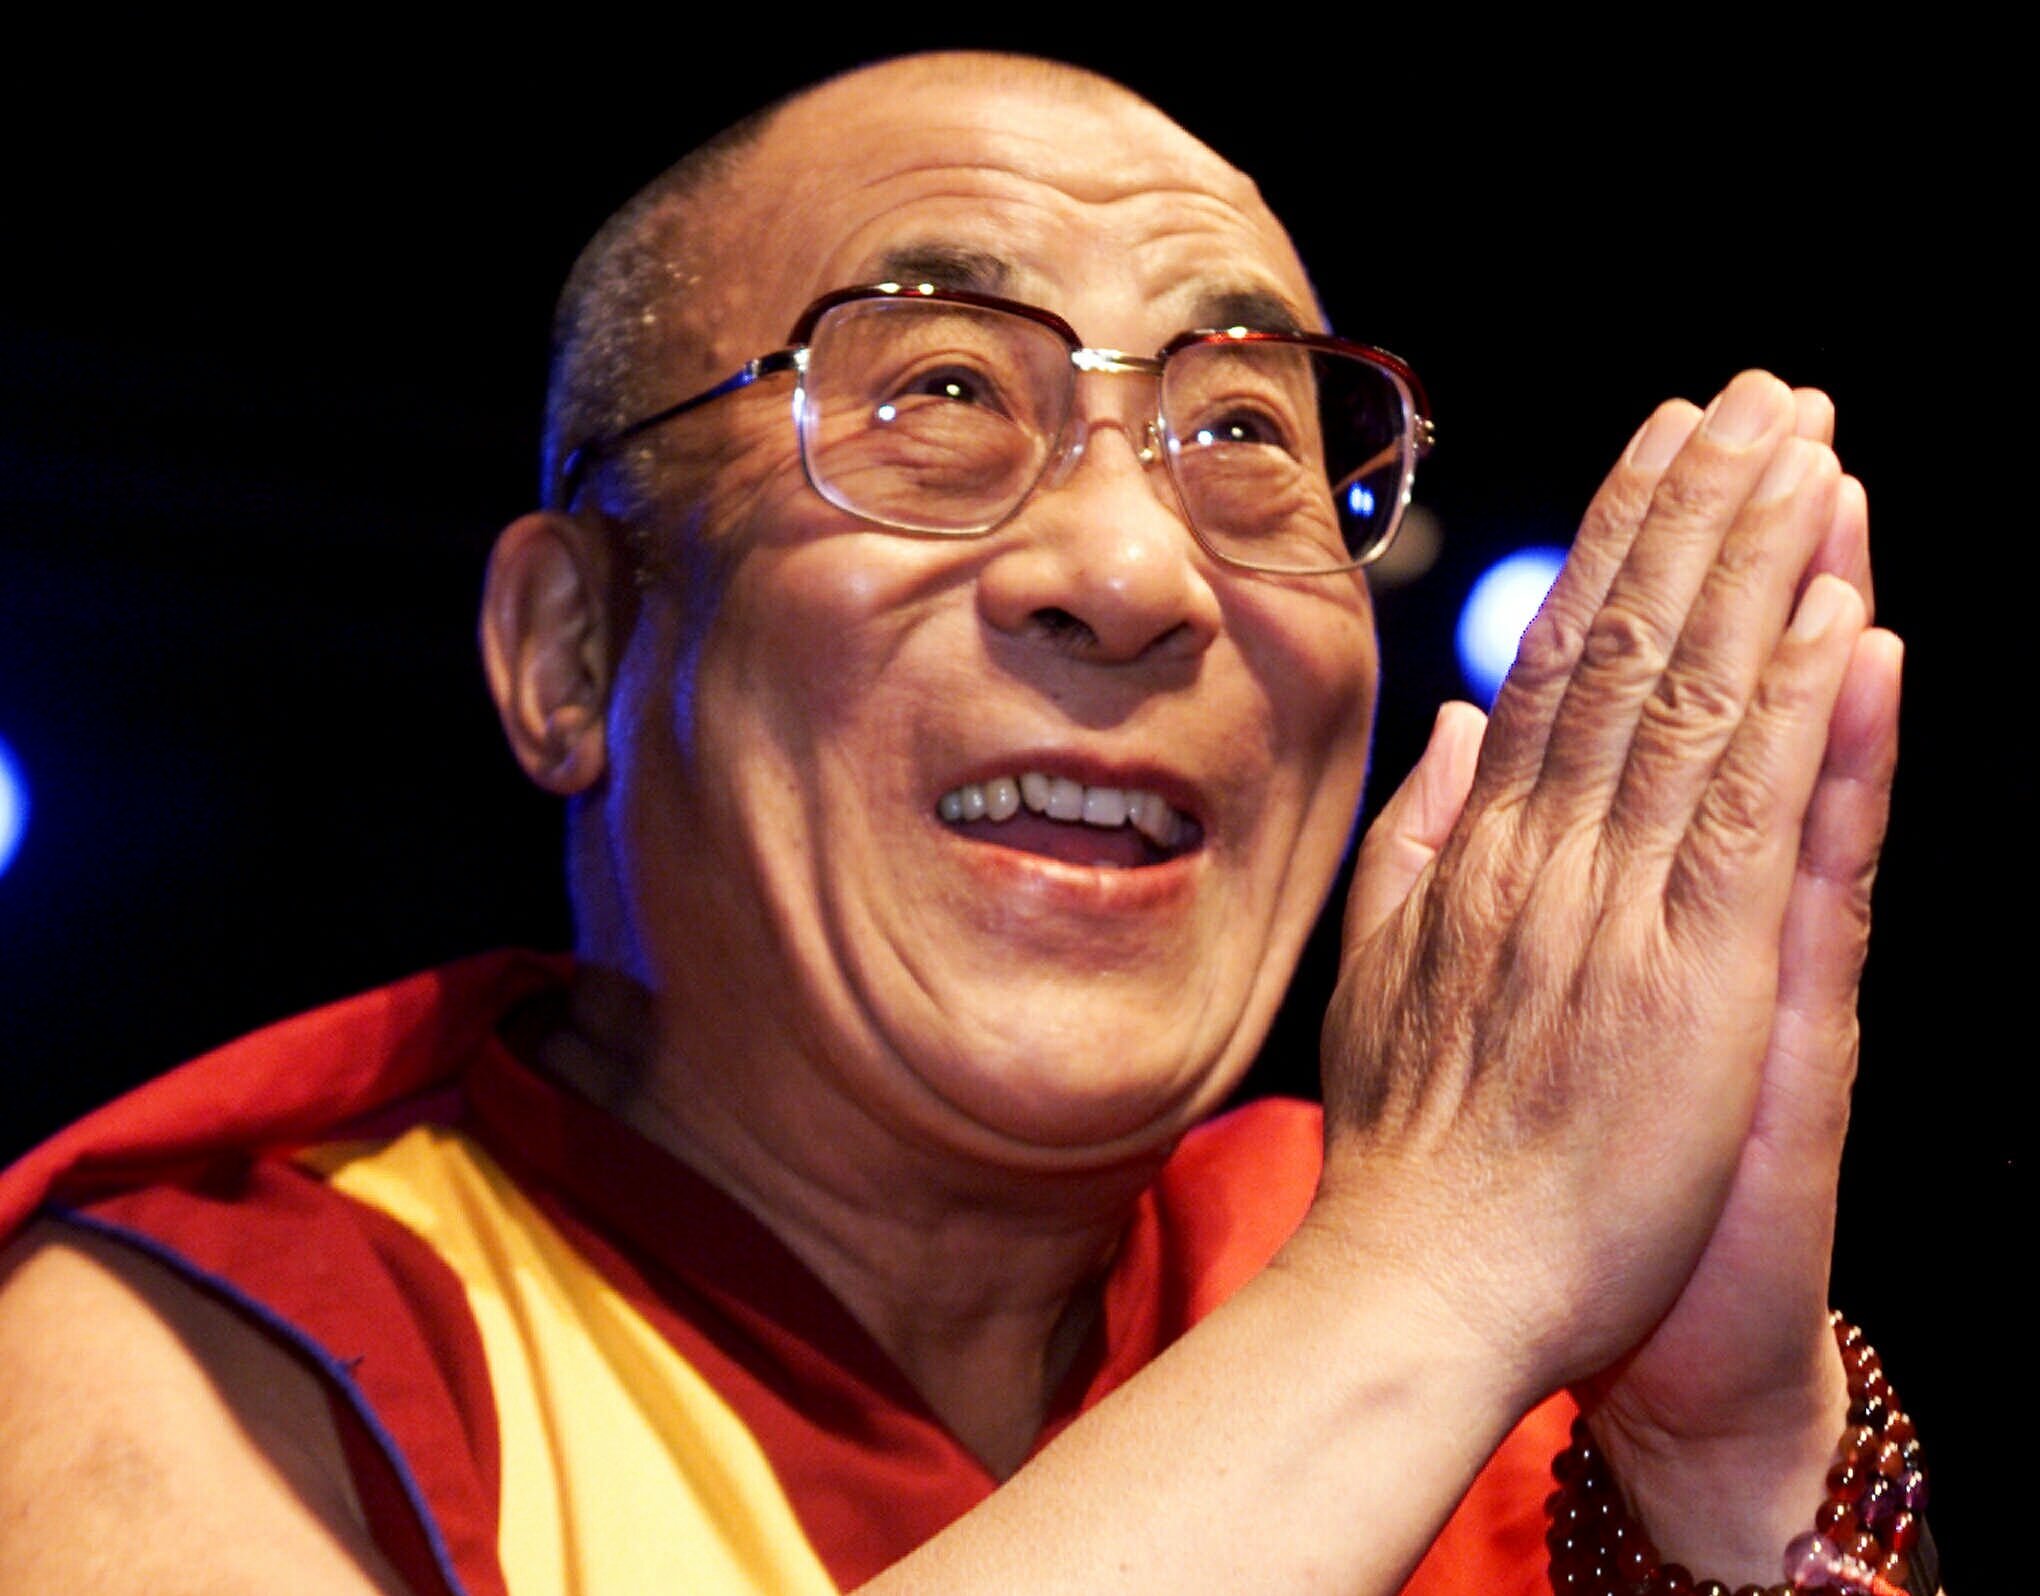 His Holiness 14th Dalai Lama 2012